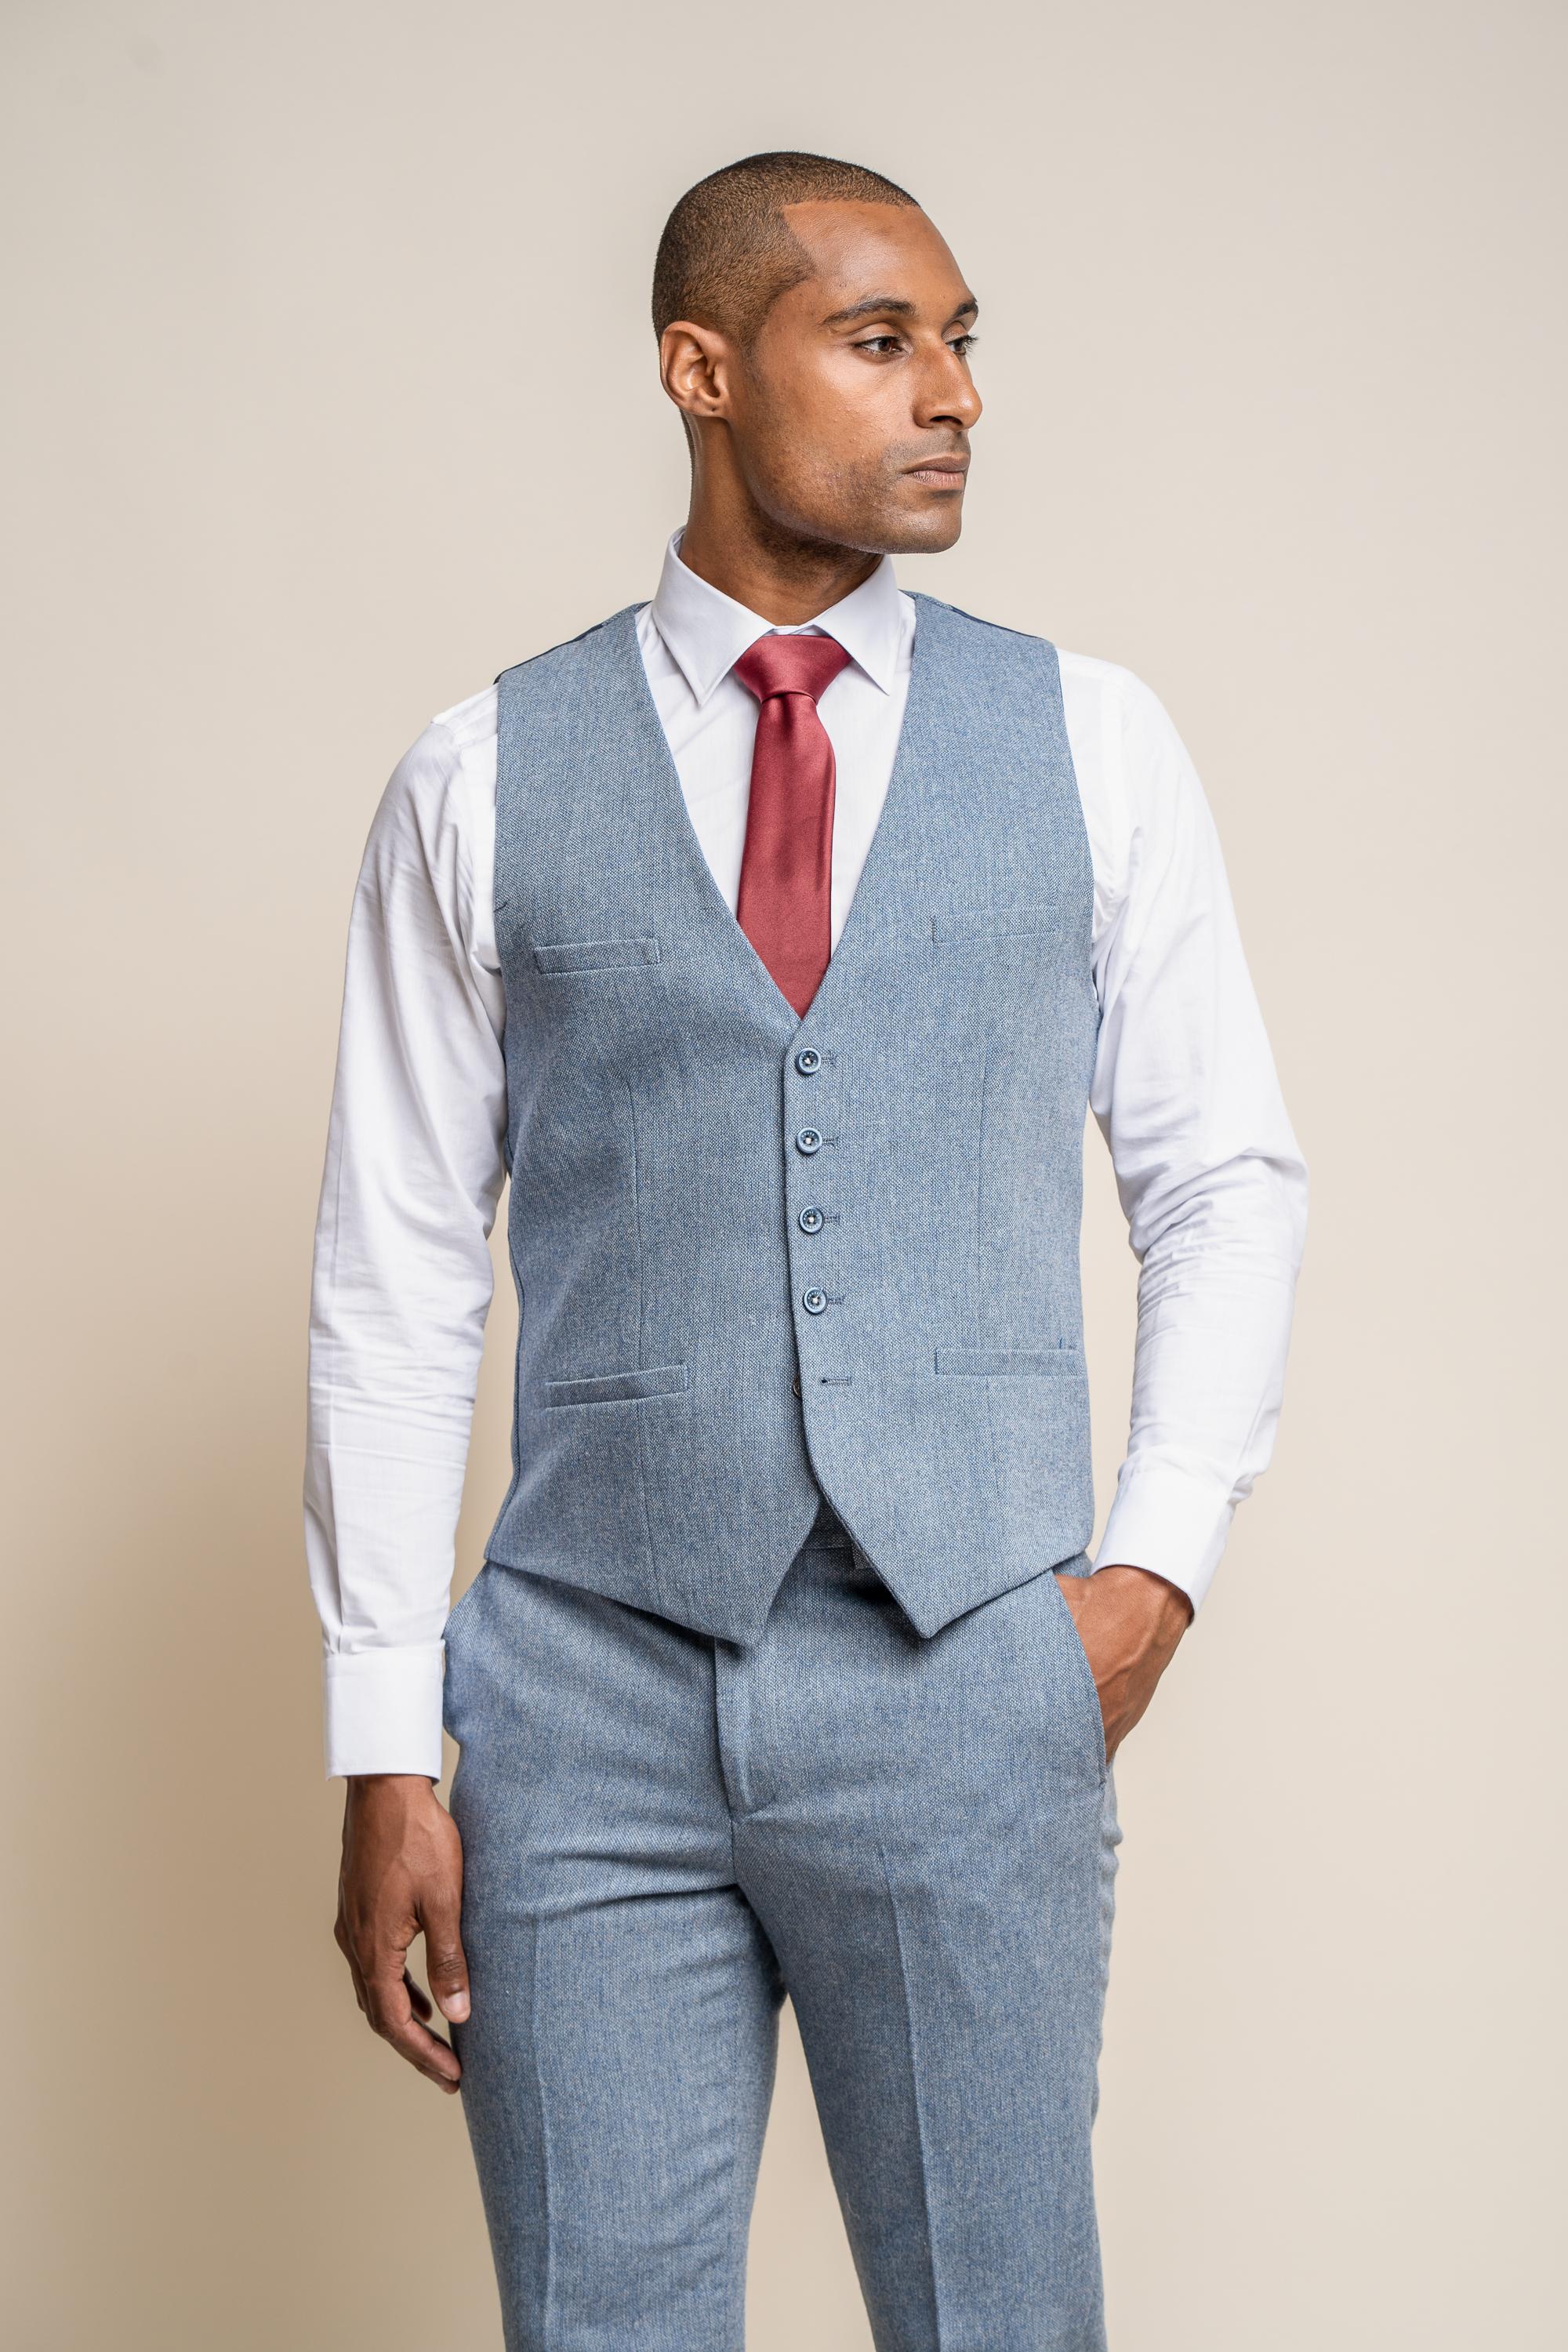 Buy Mens Slim Fit Sky Blue Suit Jacket Waistcoat Trousers Sold Separately  Set Online in India - Etsy